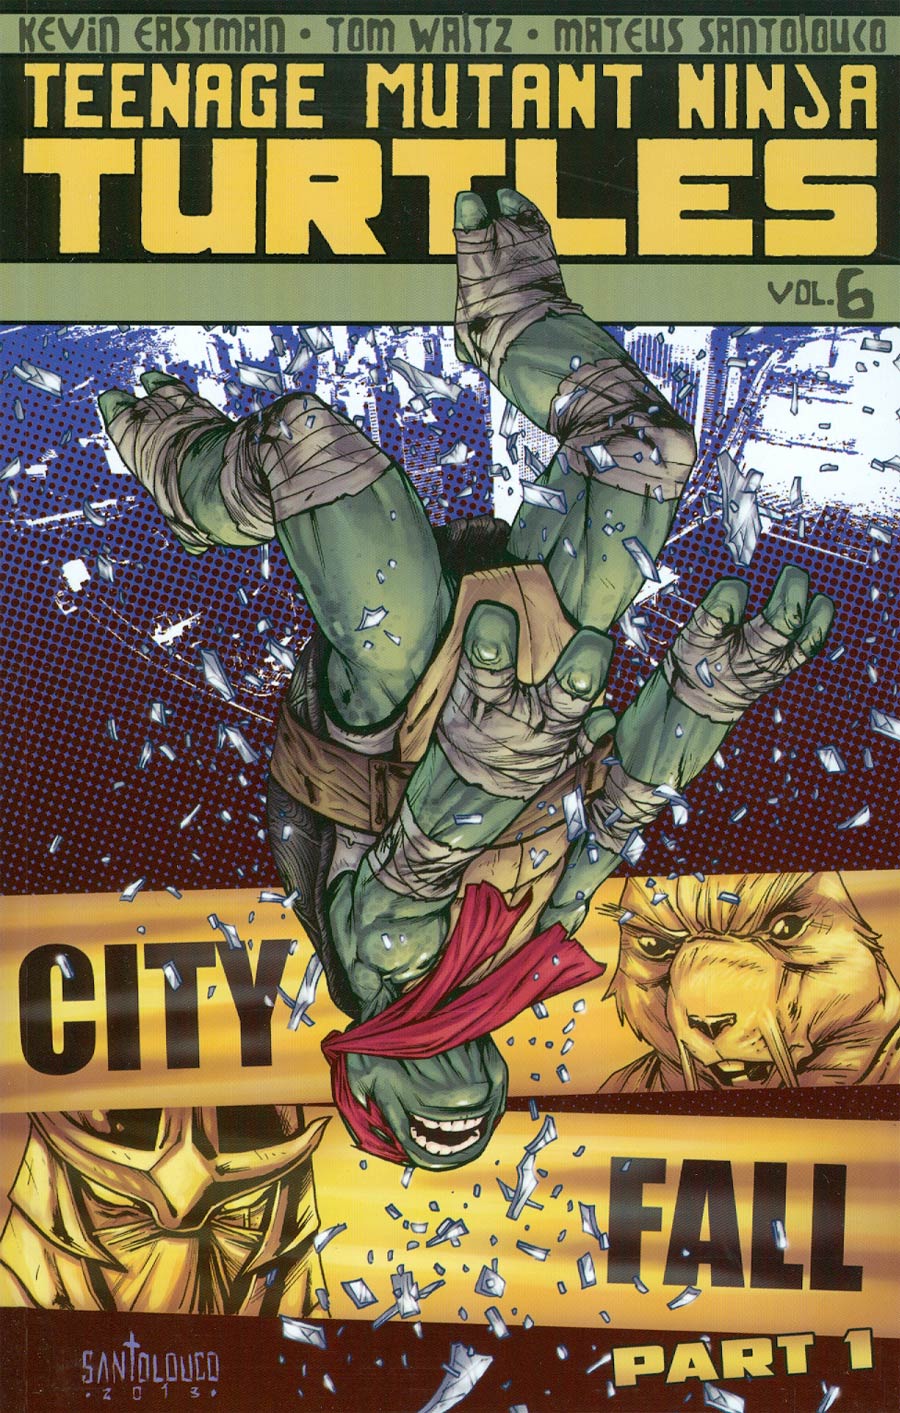 Teenage Mutant Ninja Turtles Ongoing Vol 6 City Fall Part 1 TP